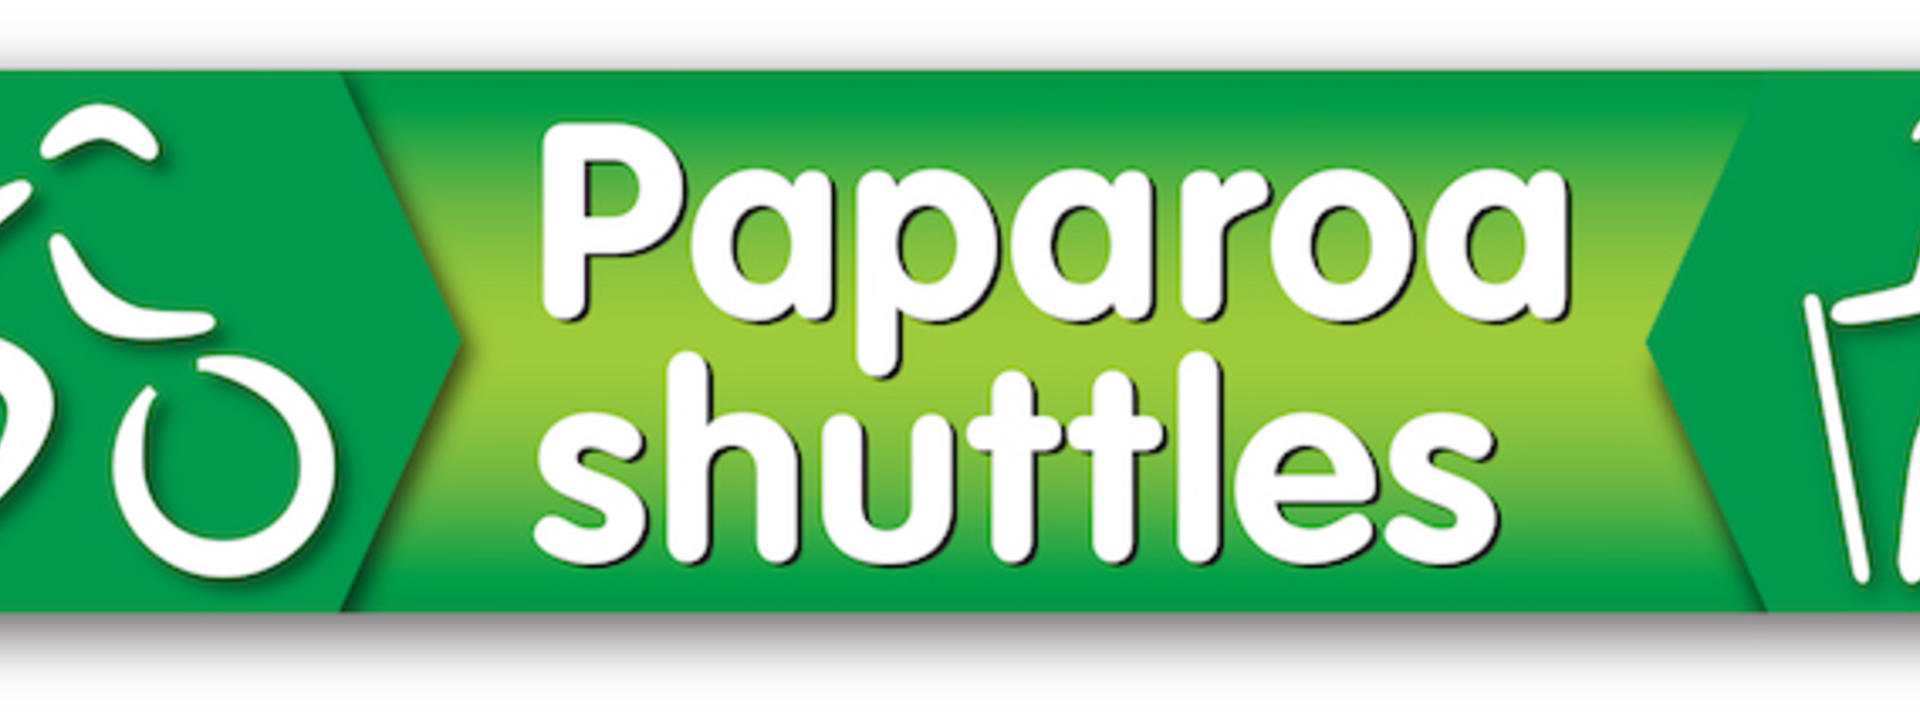 Paparoa Shuttle logo copy.jpg